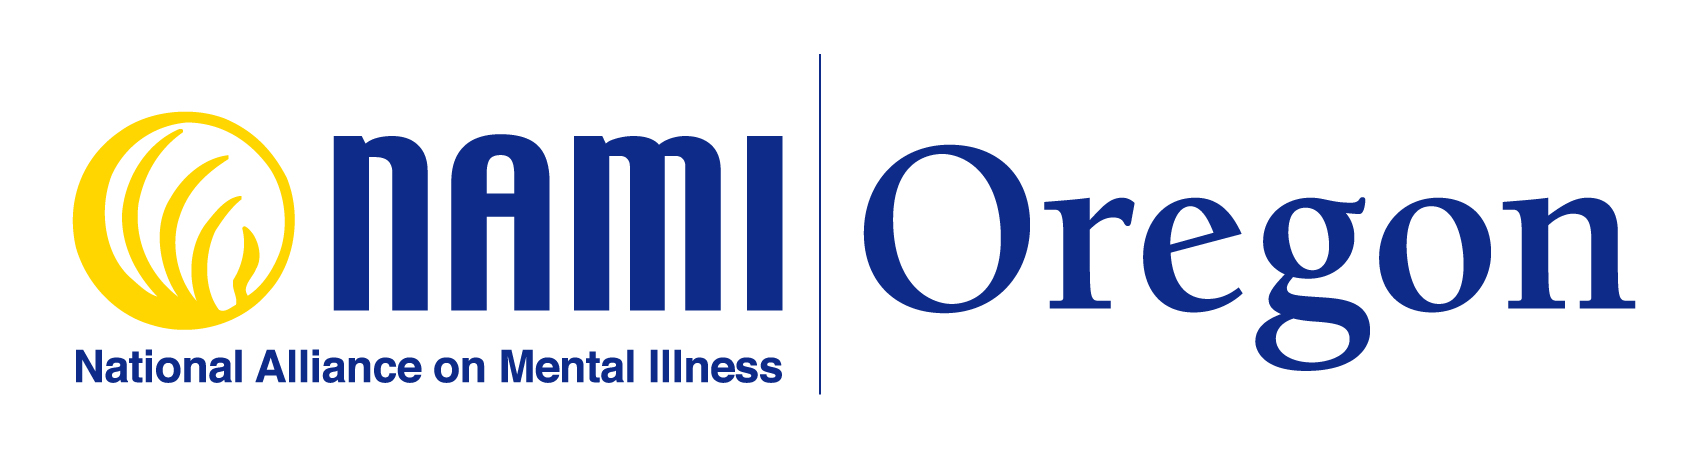 NAMI Oregon logo